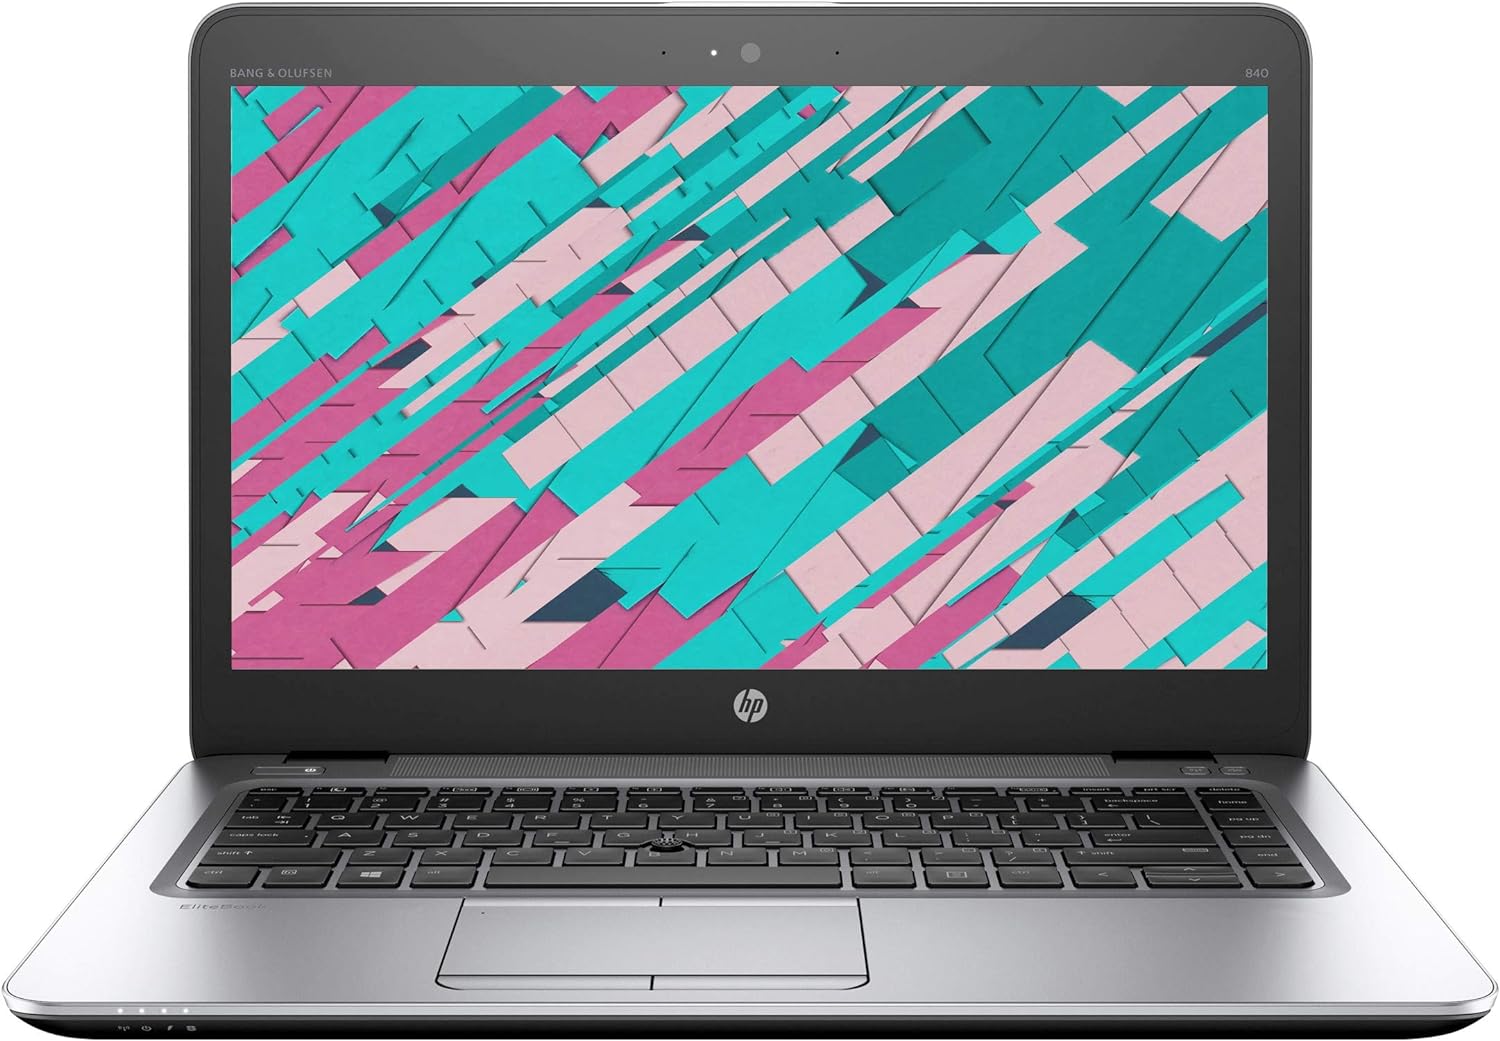 HP EliteBook 840 G4 14 Laptop, Intel i5 8200U 2.6GHz, 8GB DDR4 RAM, 256GB NVMe M.2 SSD, USB Type C, Webcam, Windows 10 (Renewed)